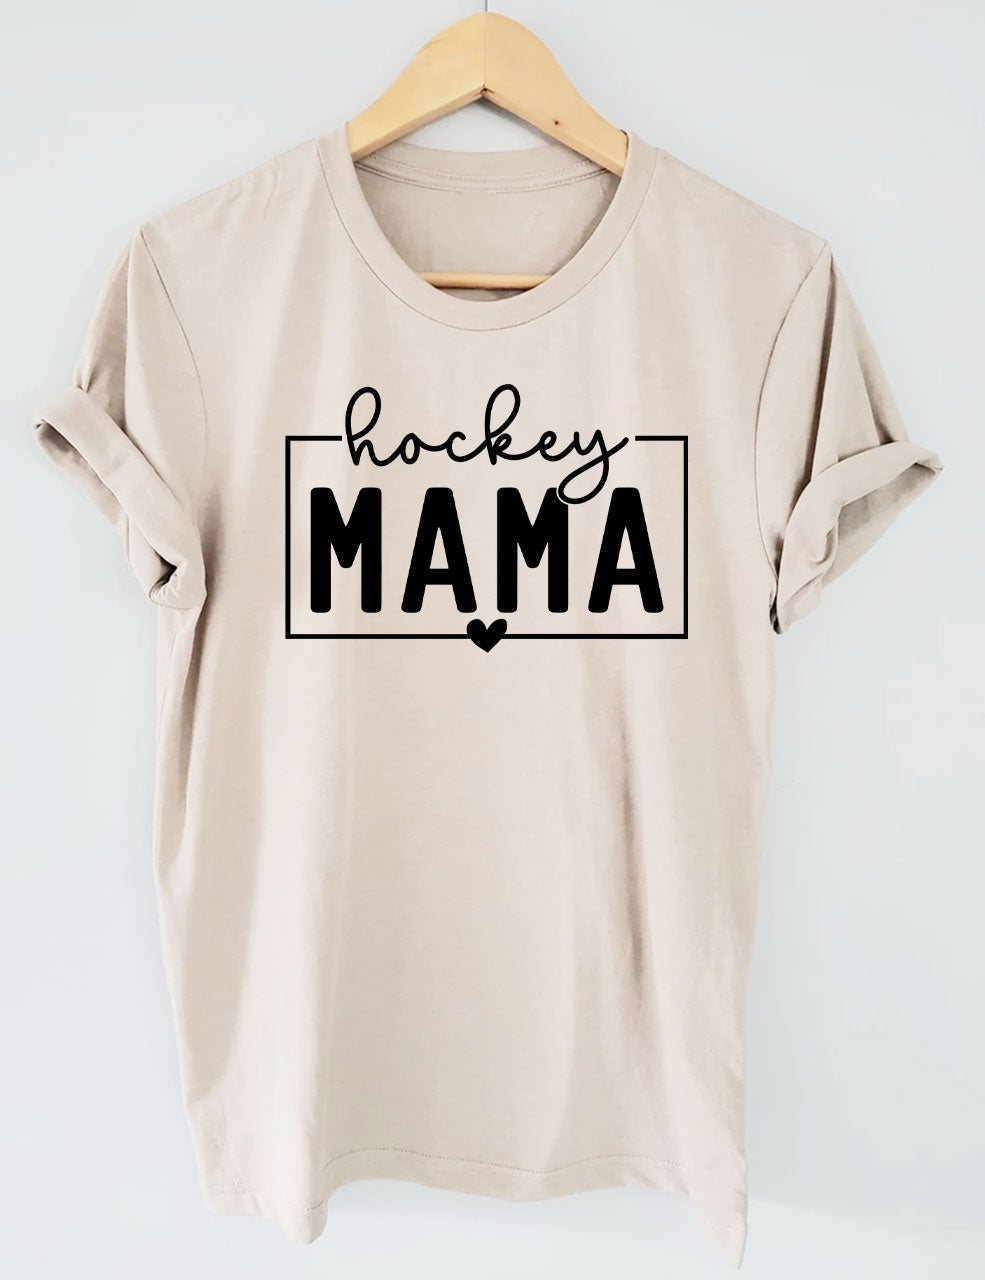 Hockey Mama T-shirt